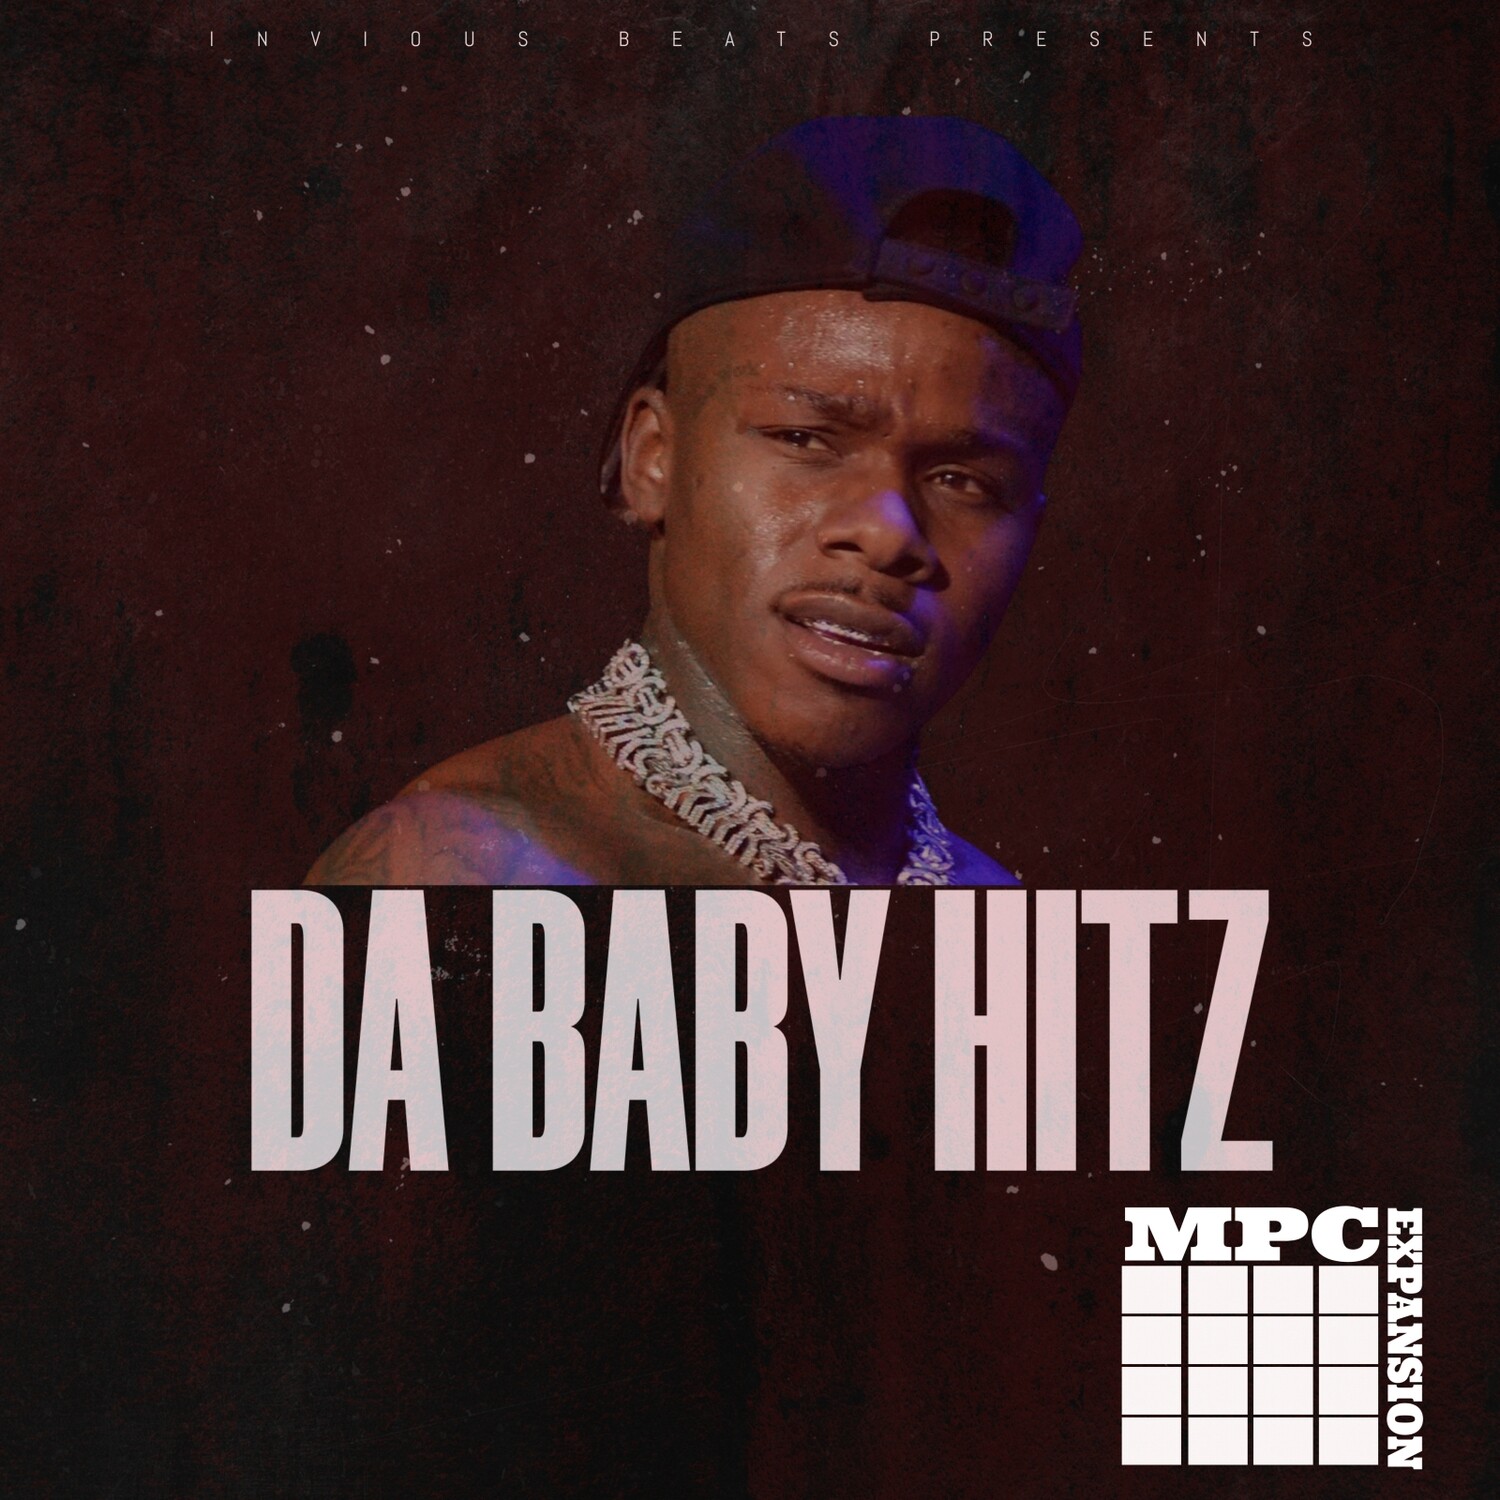 MPC EXPANSION 'DA BABY HITZ' by INVIOUS + PHONE BOOTH MIDI KIT